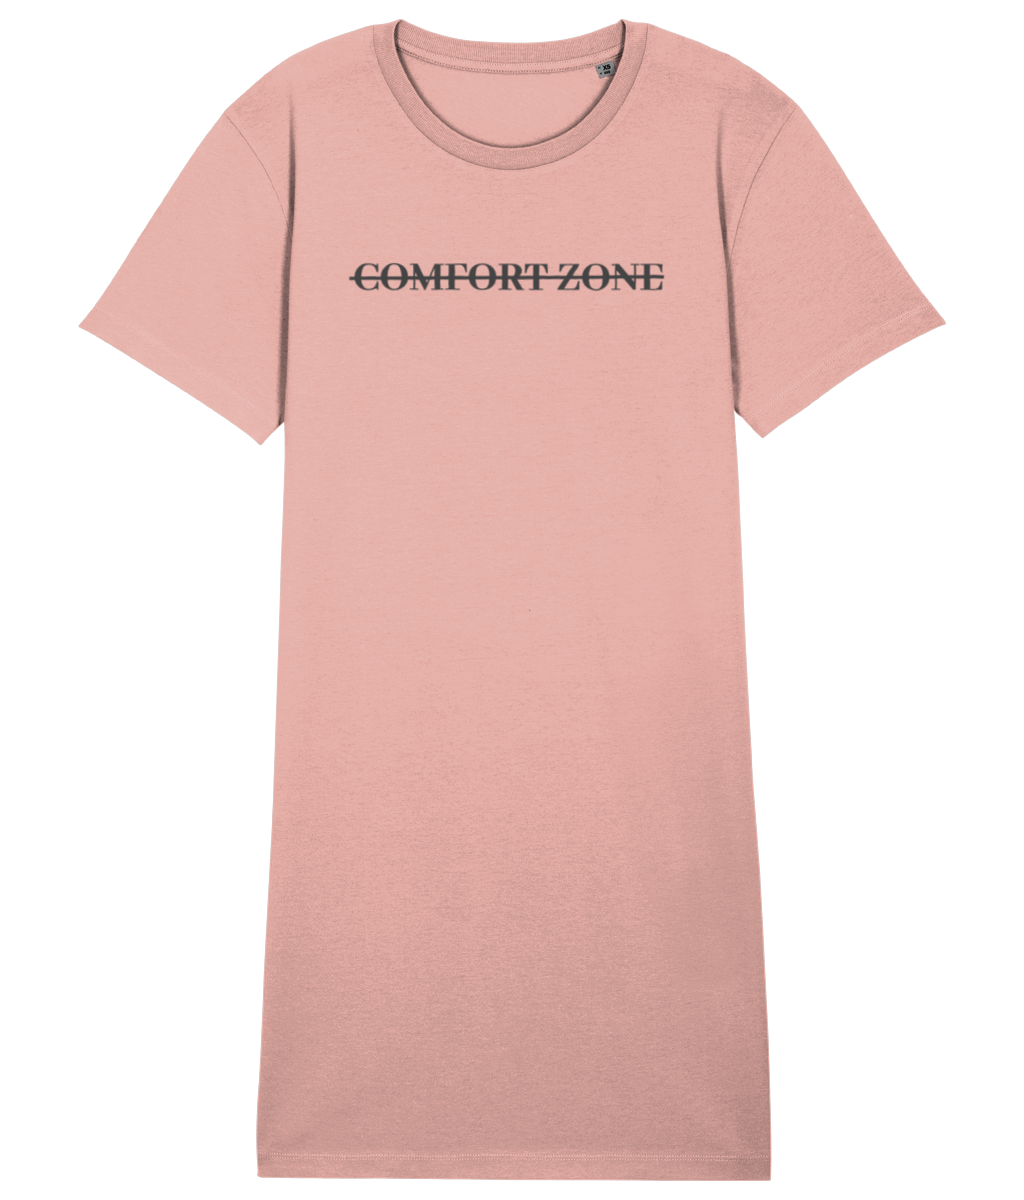 COMFORT ZONE T-SHIRT DRESS